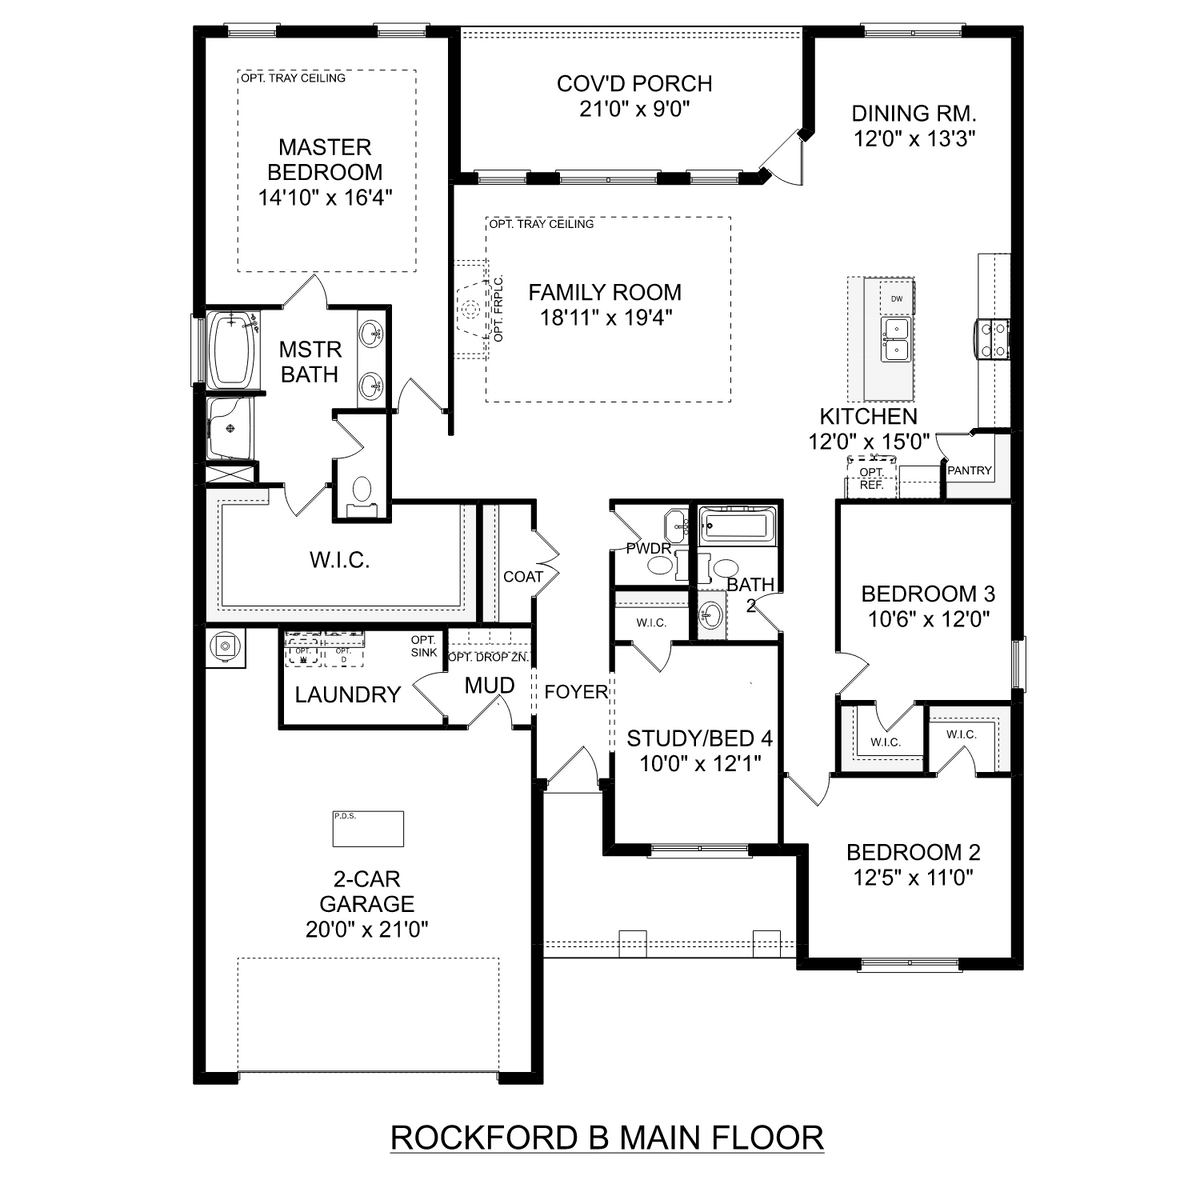 1 - The Rockford B floor plan layout for 2104 Brandon Drive in Davidson Homes' North Ridge community.